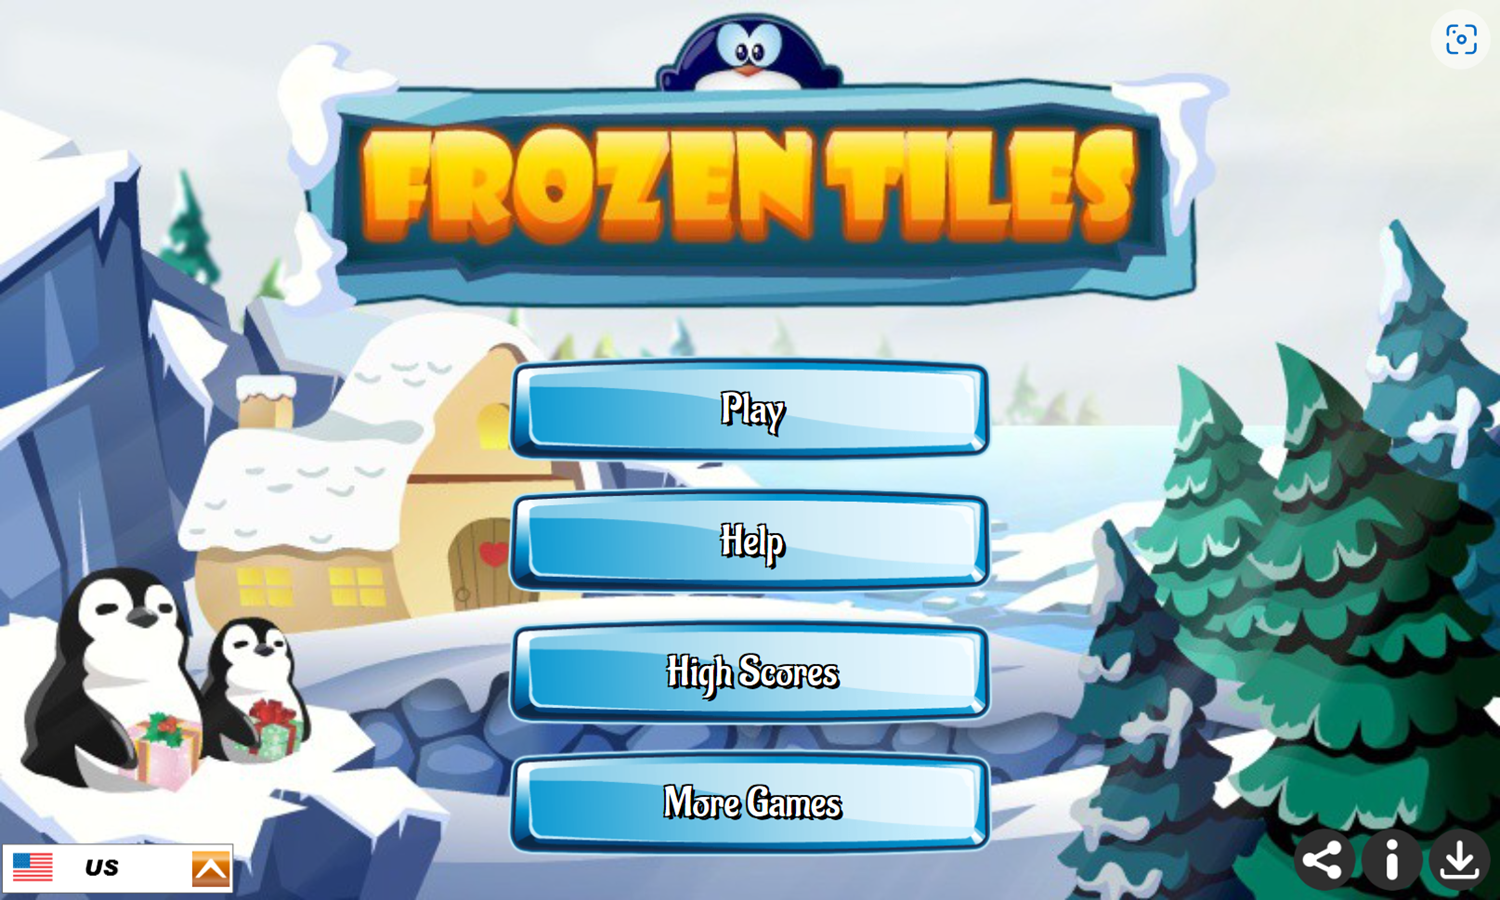 Frozen Tiles Game Welcome Screen Screenshot.